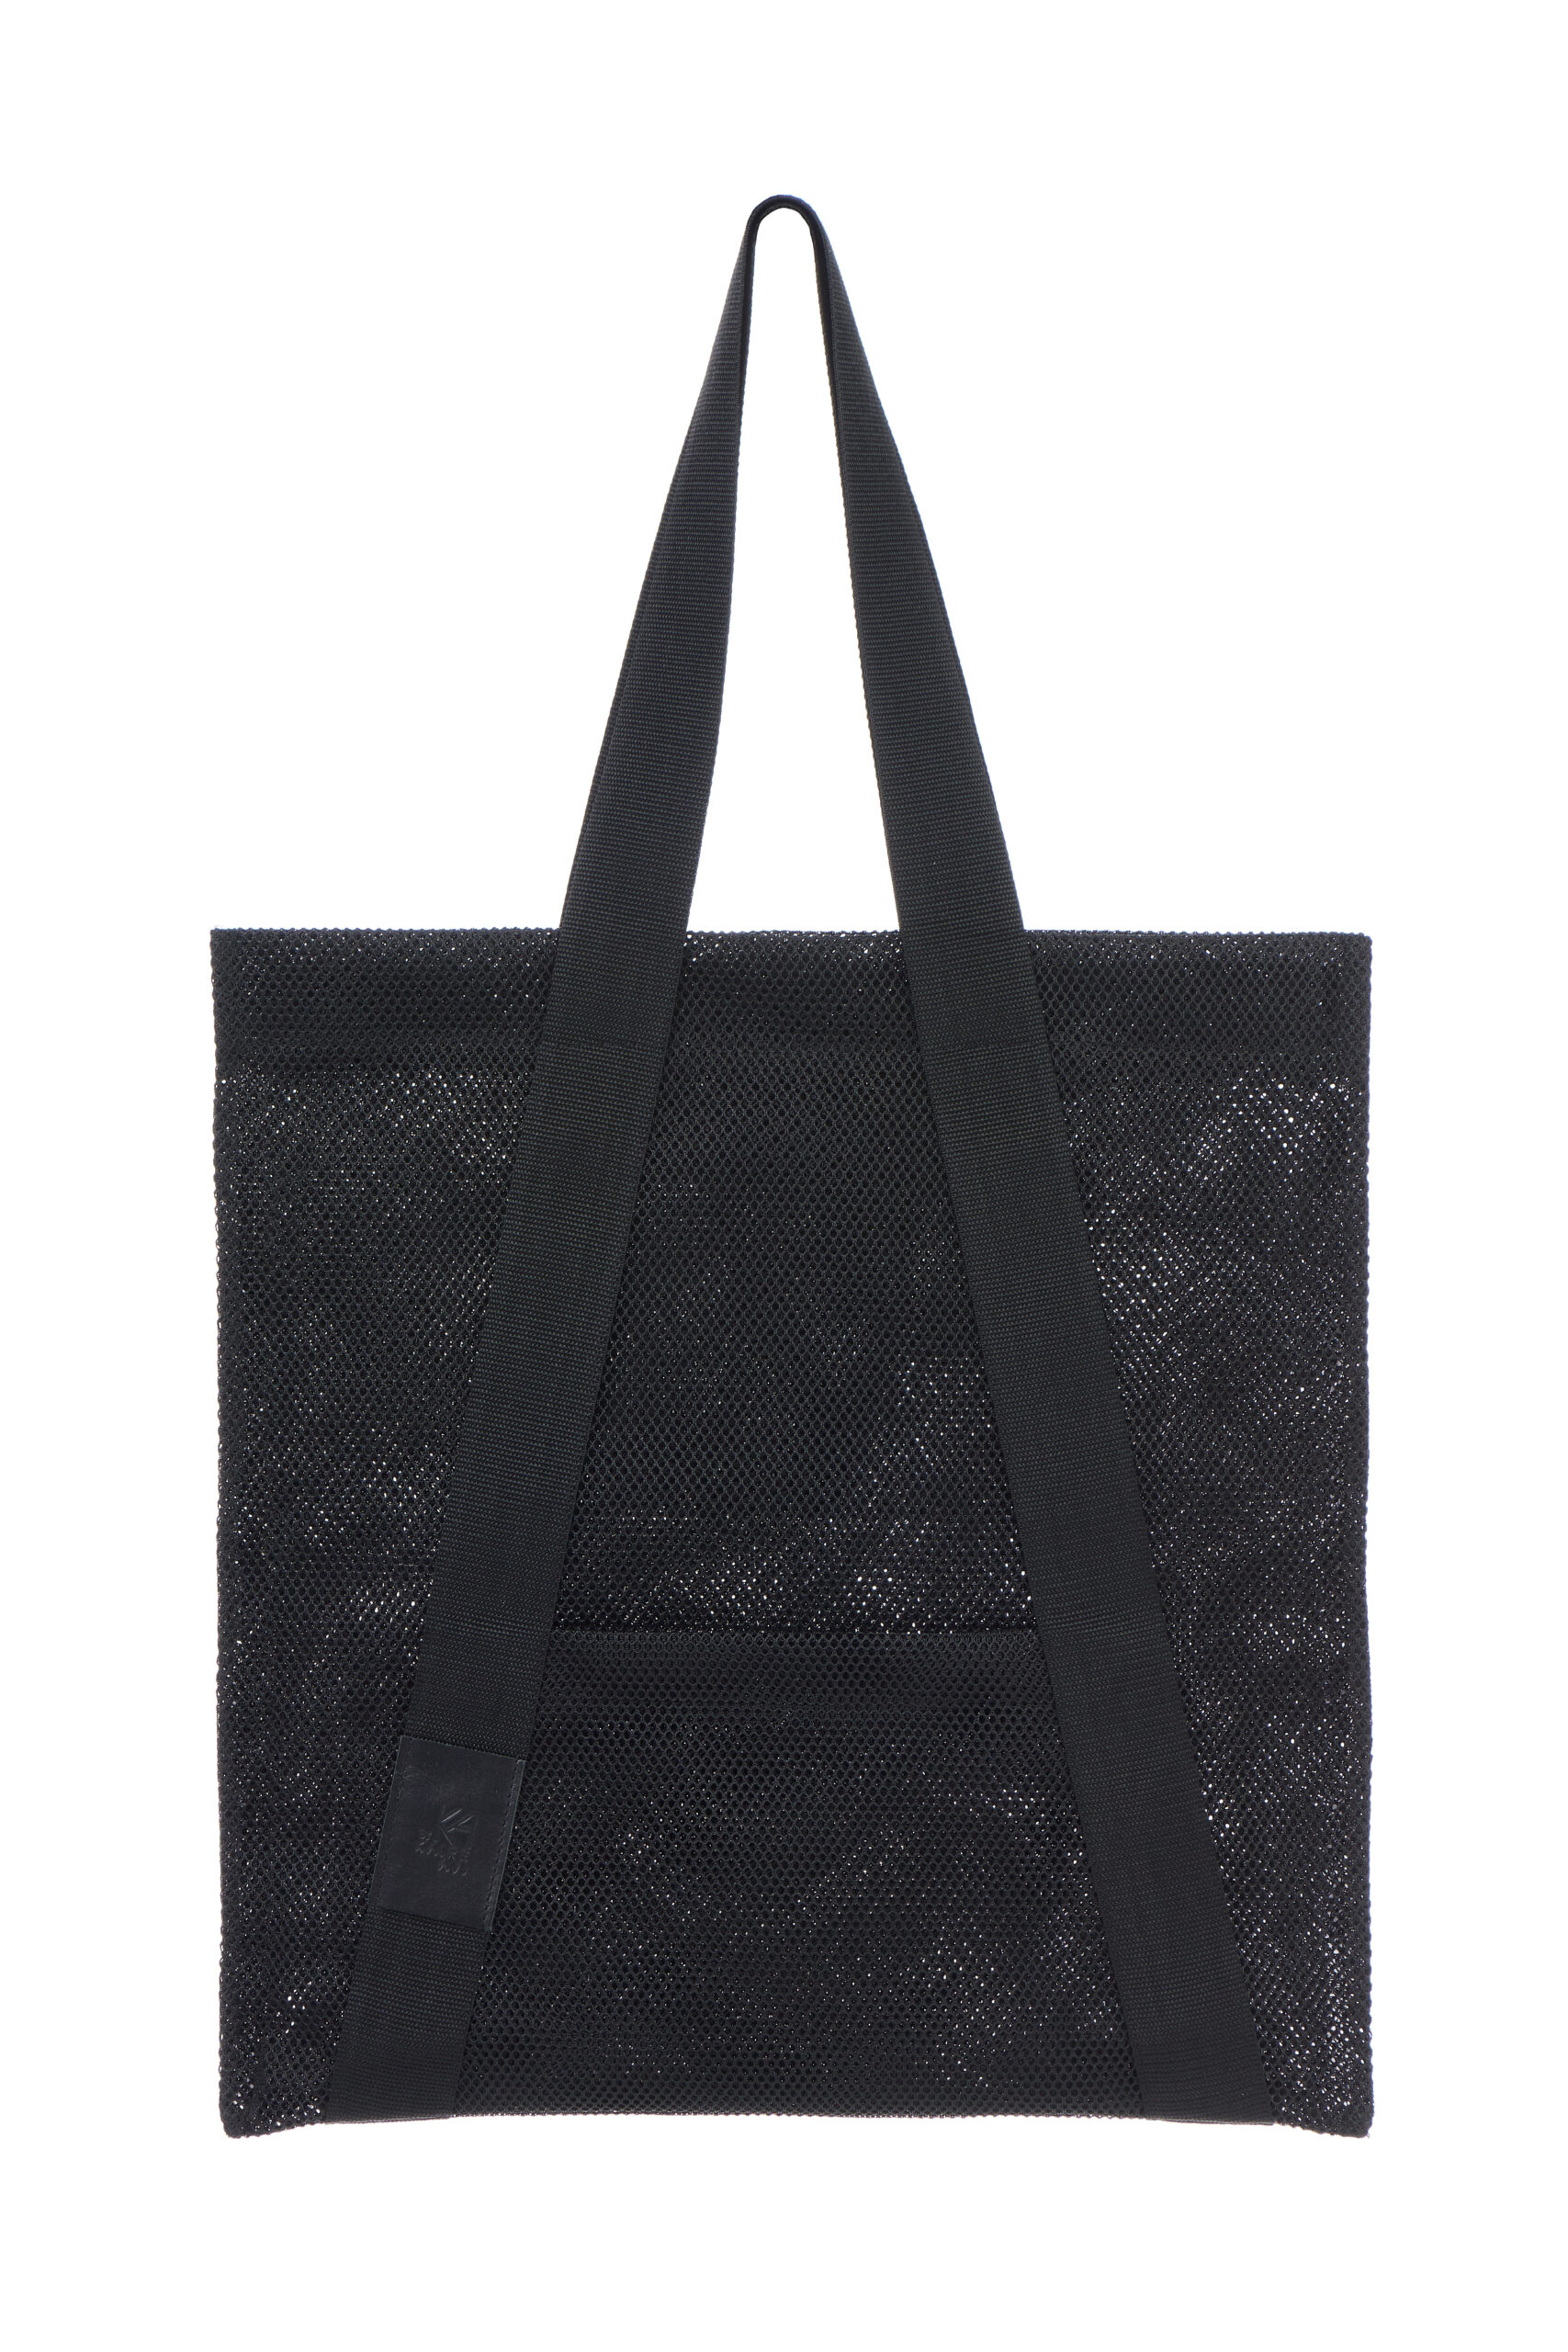 Poekott “Hanna” must rihm / Tote bag “Hanna” black, black straps